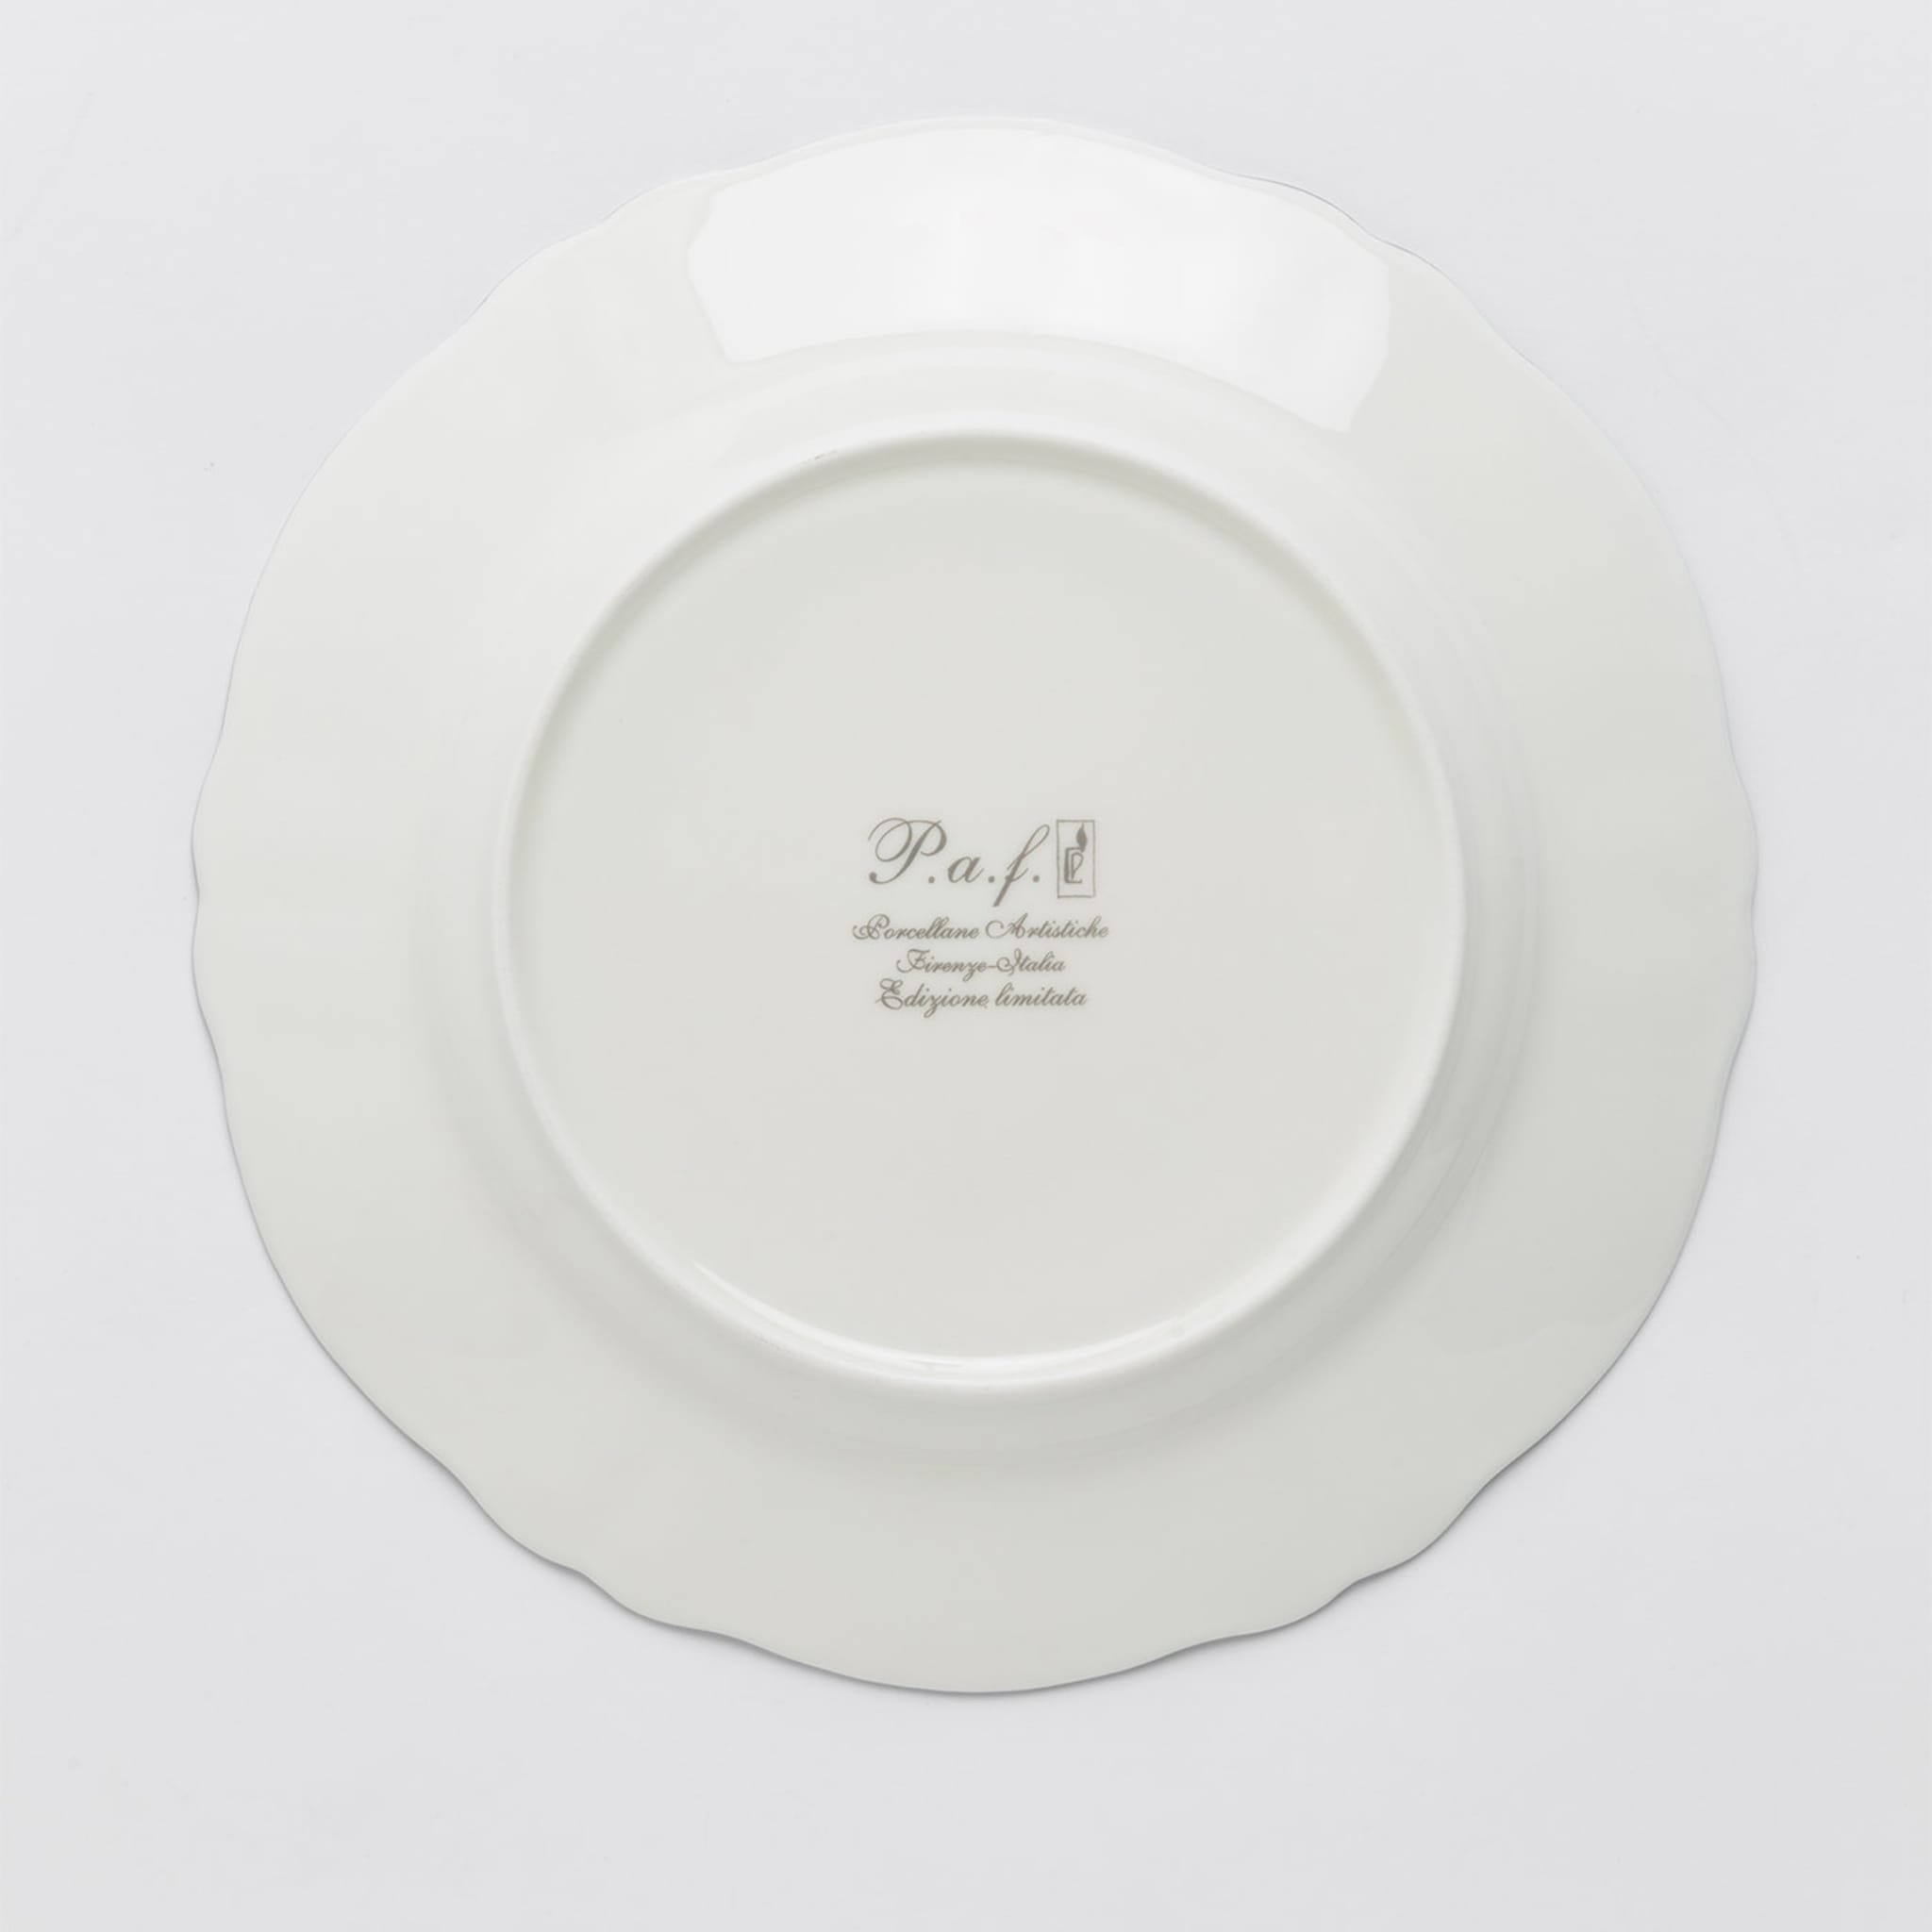 Bocci di Peonia Set of 4 Dinner Plates - Alternative view 5